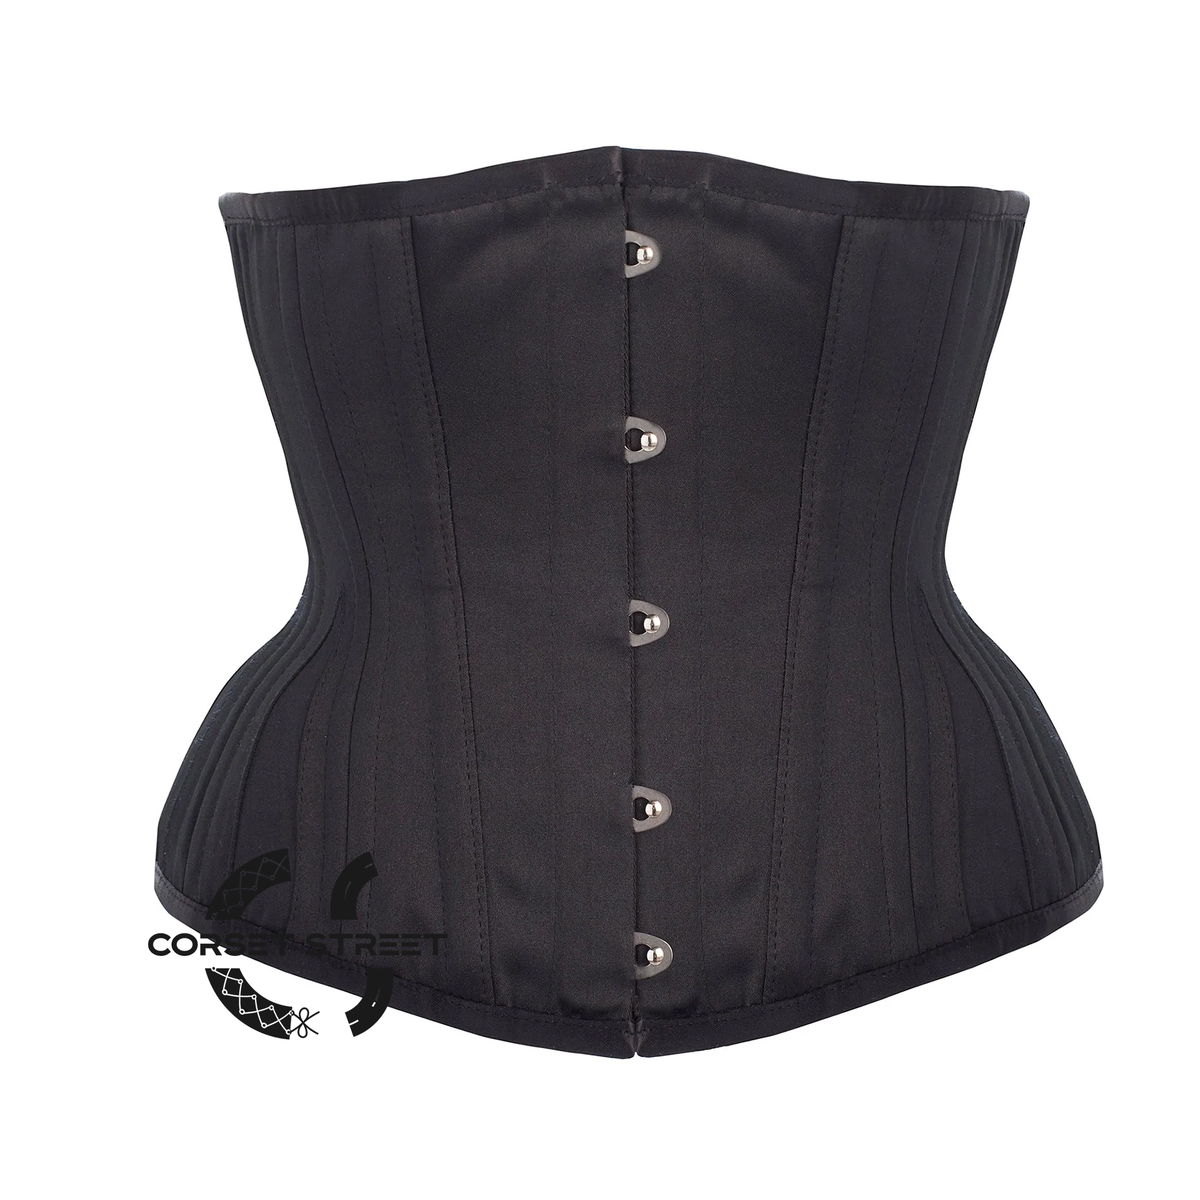 Black Cotton Underbust Corset Gothic Costume Bustier Top